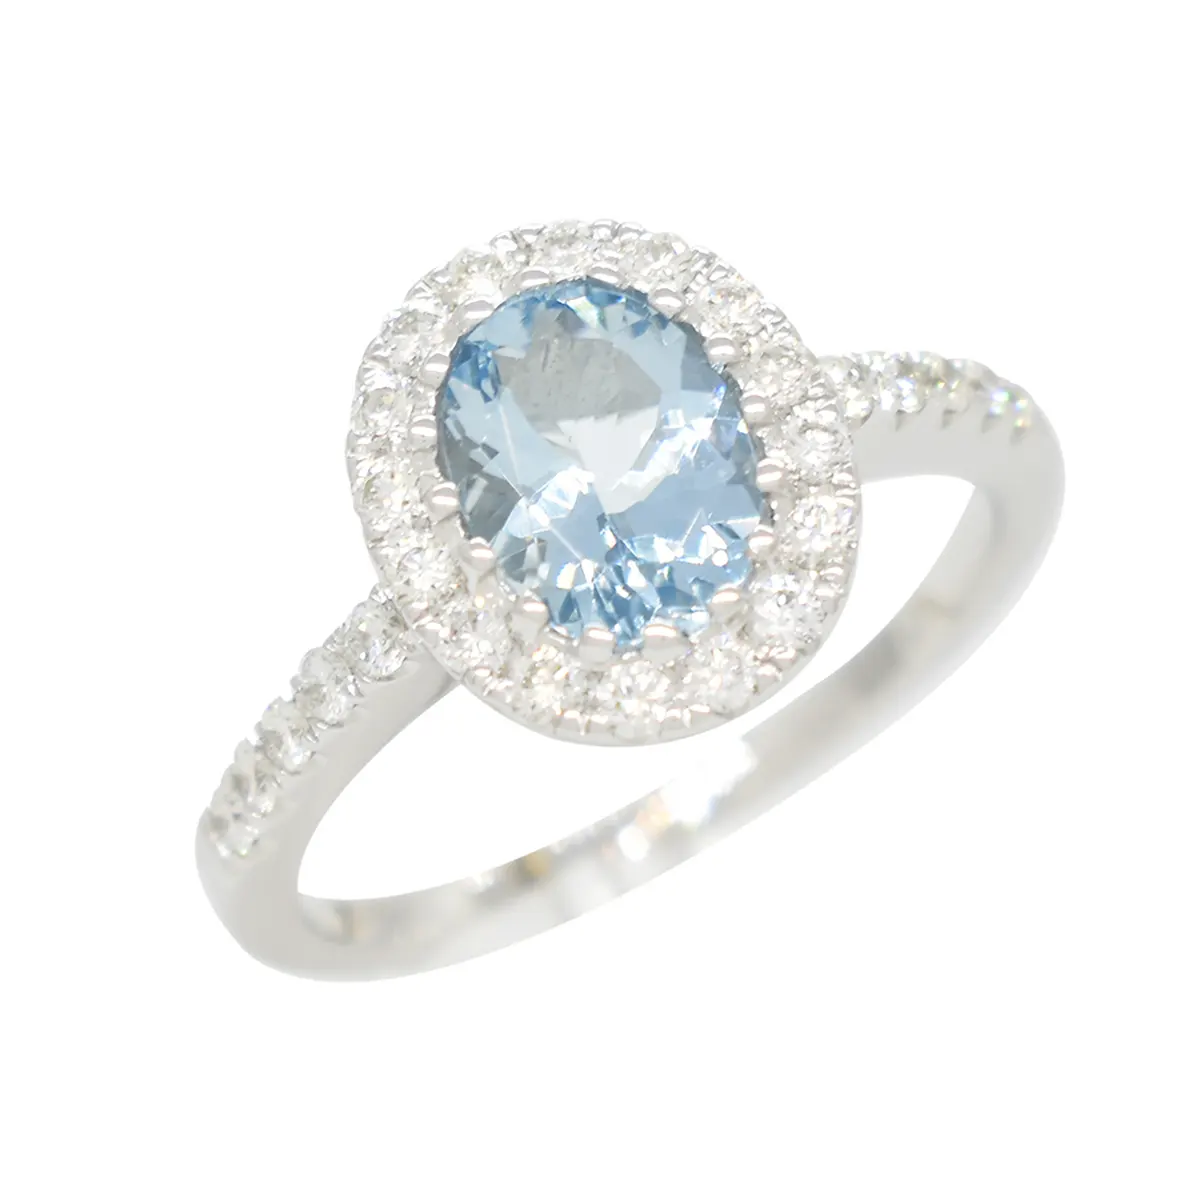 stunning-aquamarine-ring-with-oval-shape-genuine-aquamarine-and-diamond-halo